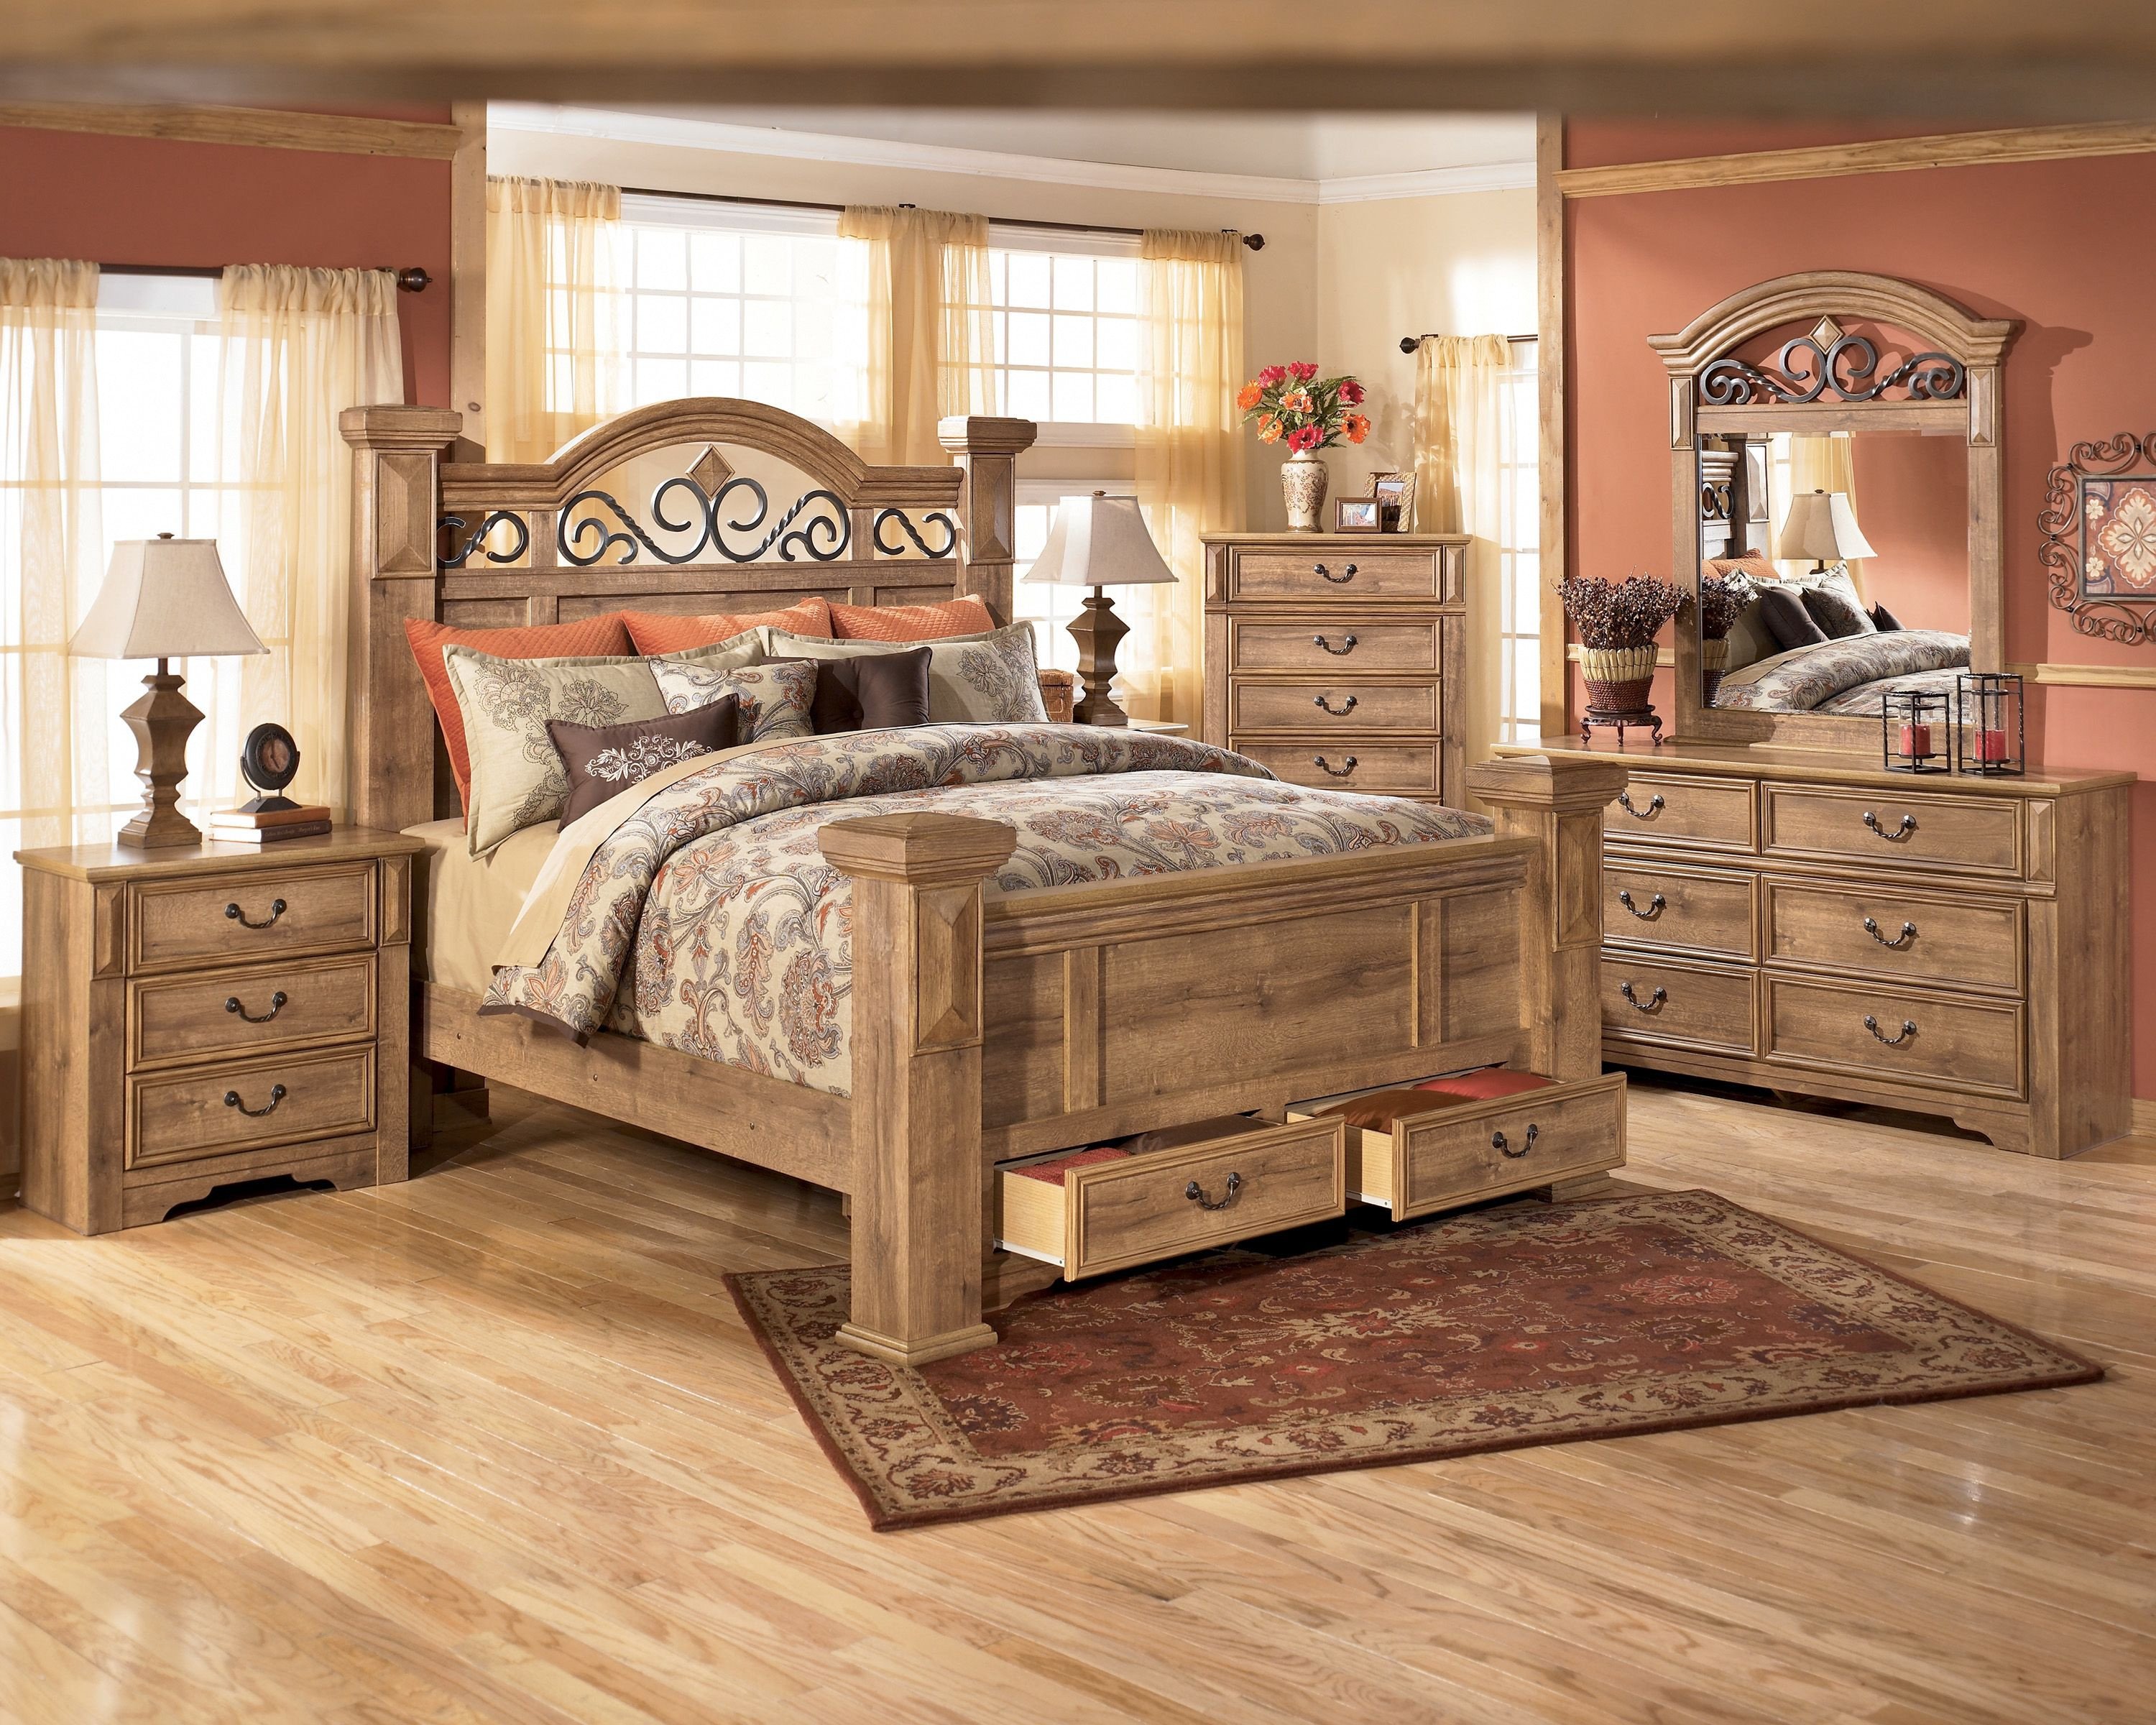 bobs discount bedroom furniture set